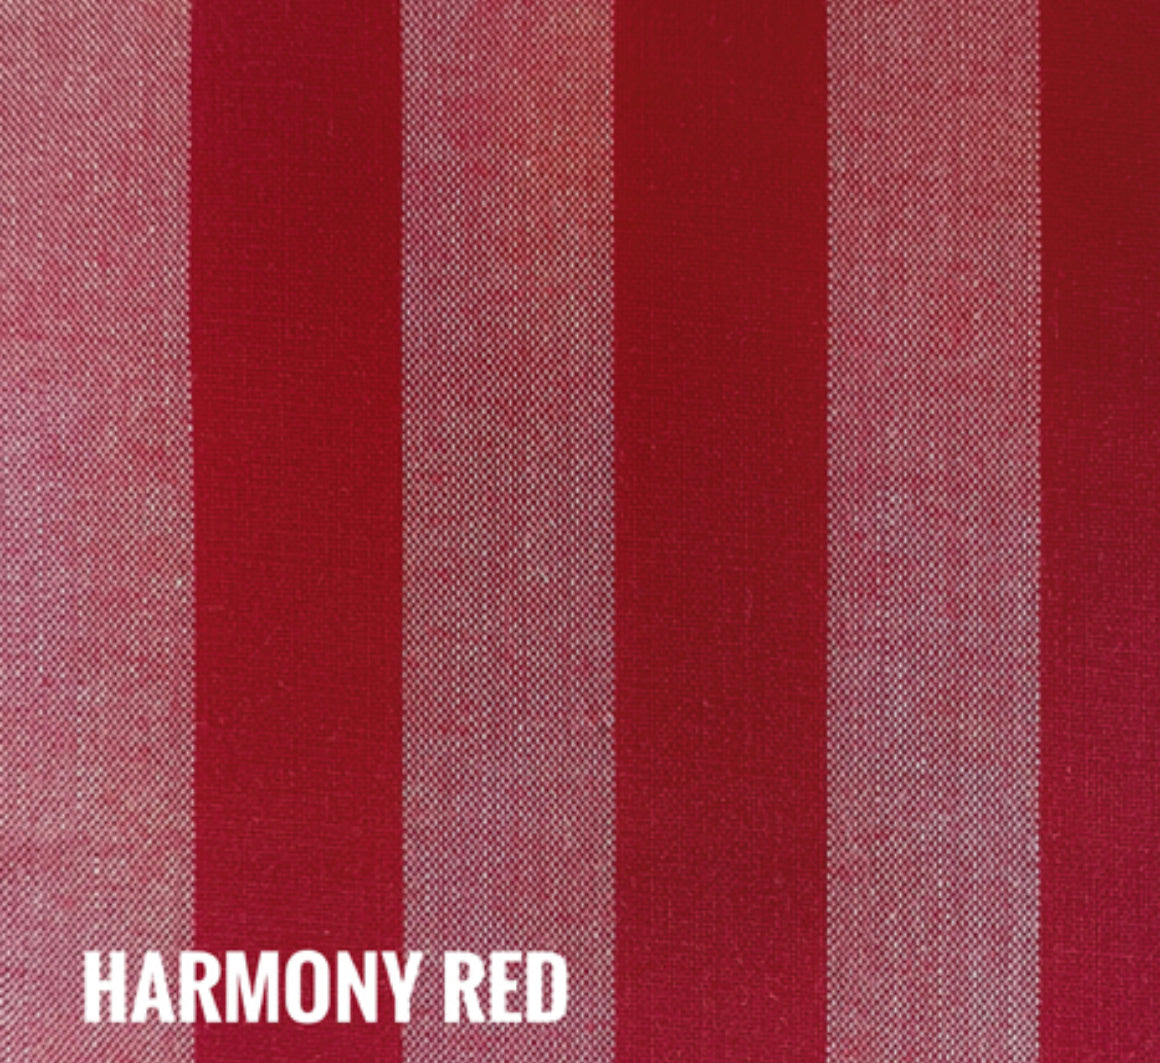 Fabric Journey & Co: Stripe/ Harmony Red